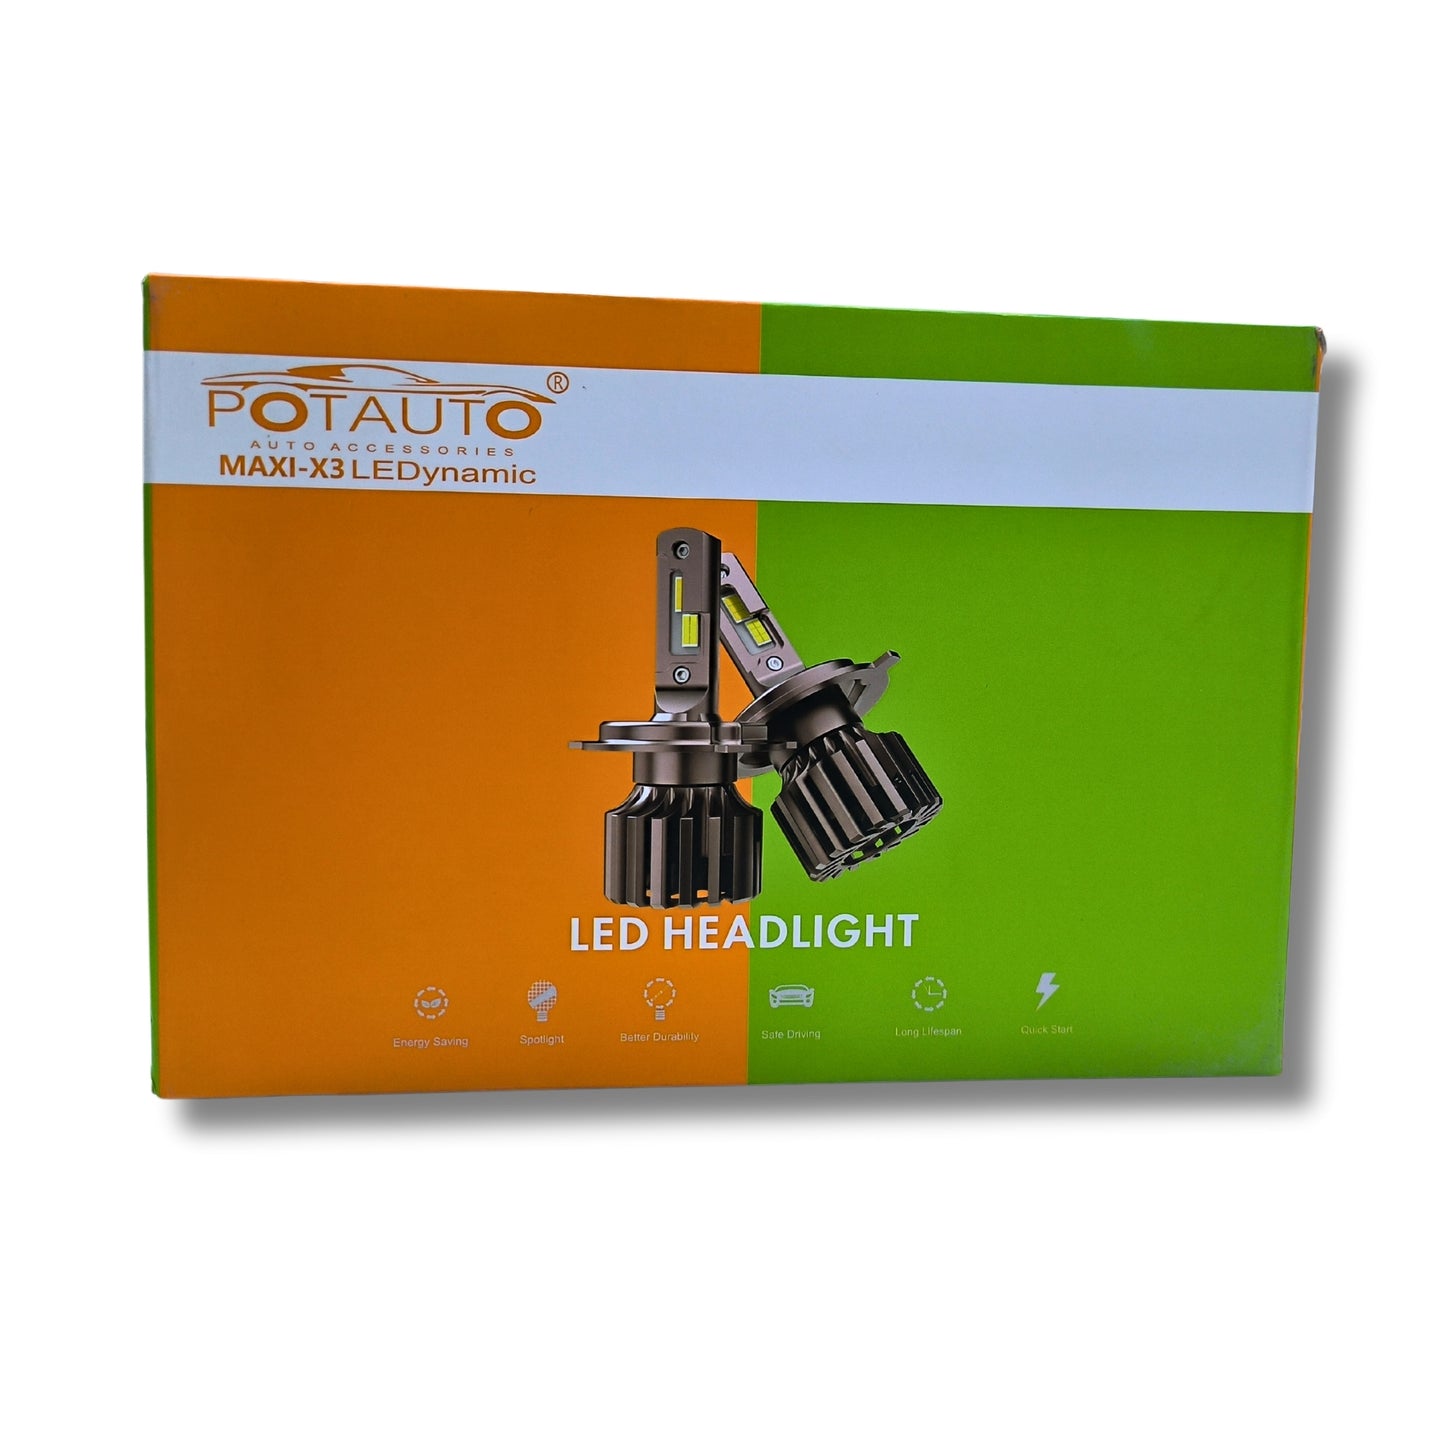 Potauto Maxi-X3LEDynamic Headlight LED Bulb: 3 Color Light, 12V, 120W Power, All-Weather Performance